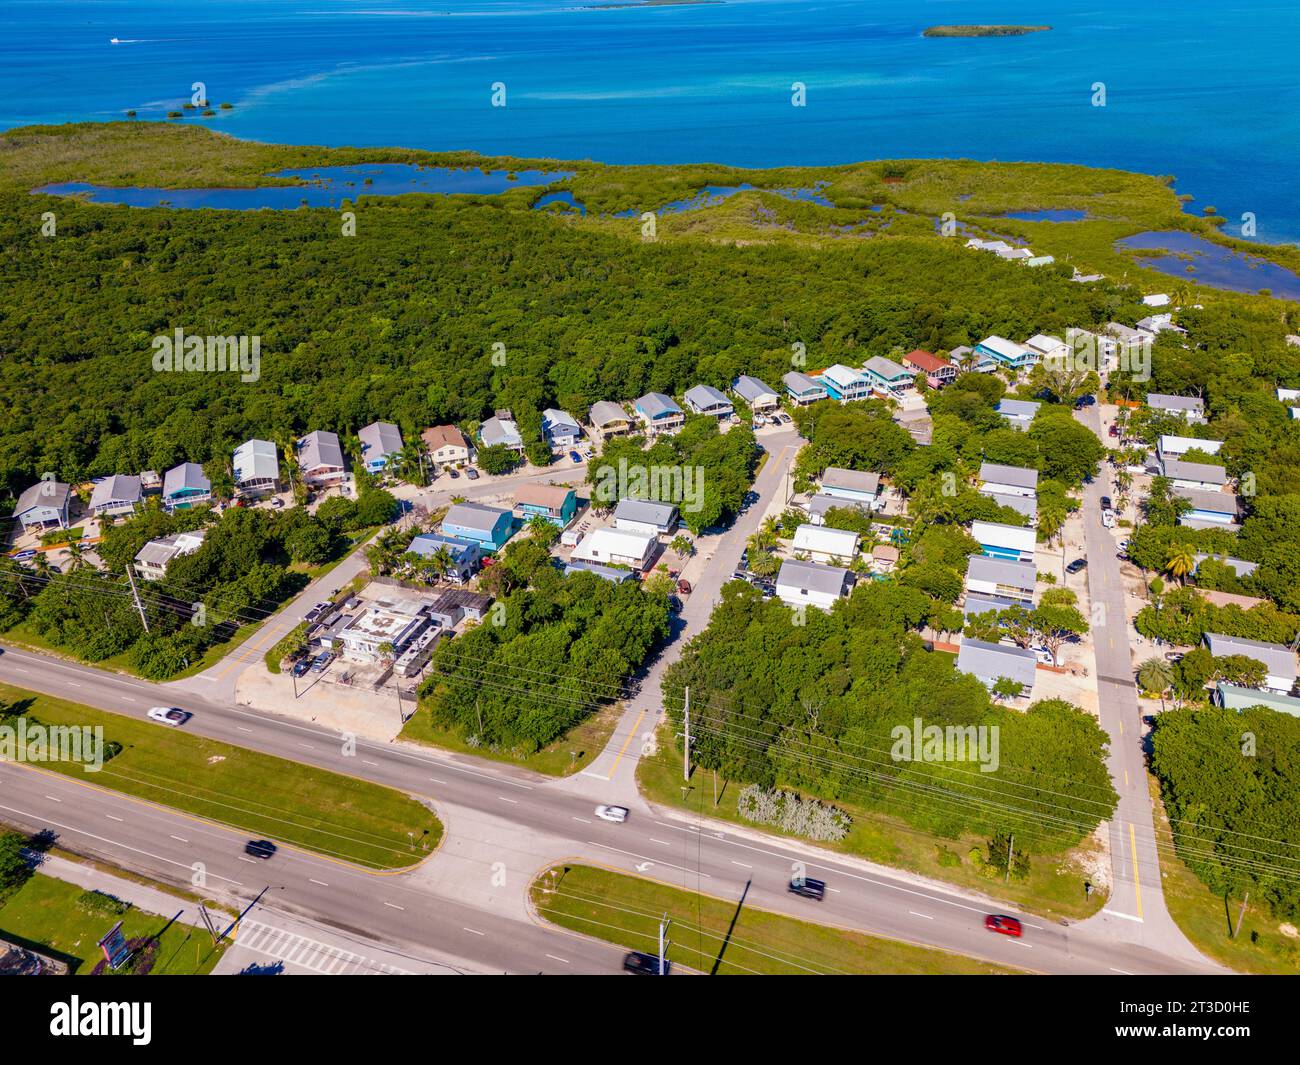 Aerial photo residential neighborhoods in the Florida Keys Stock Photo